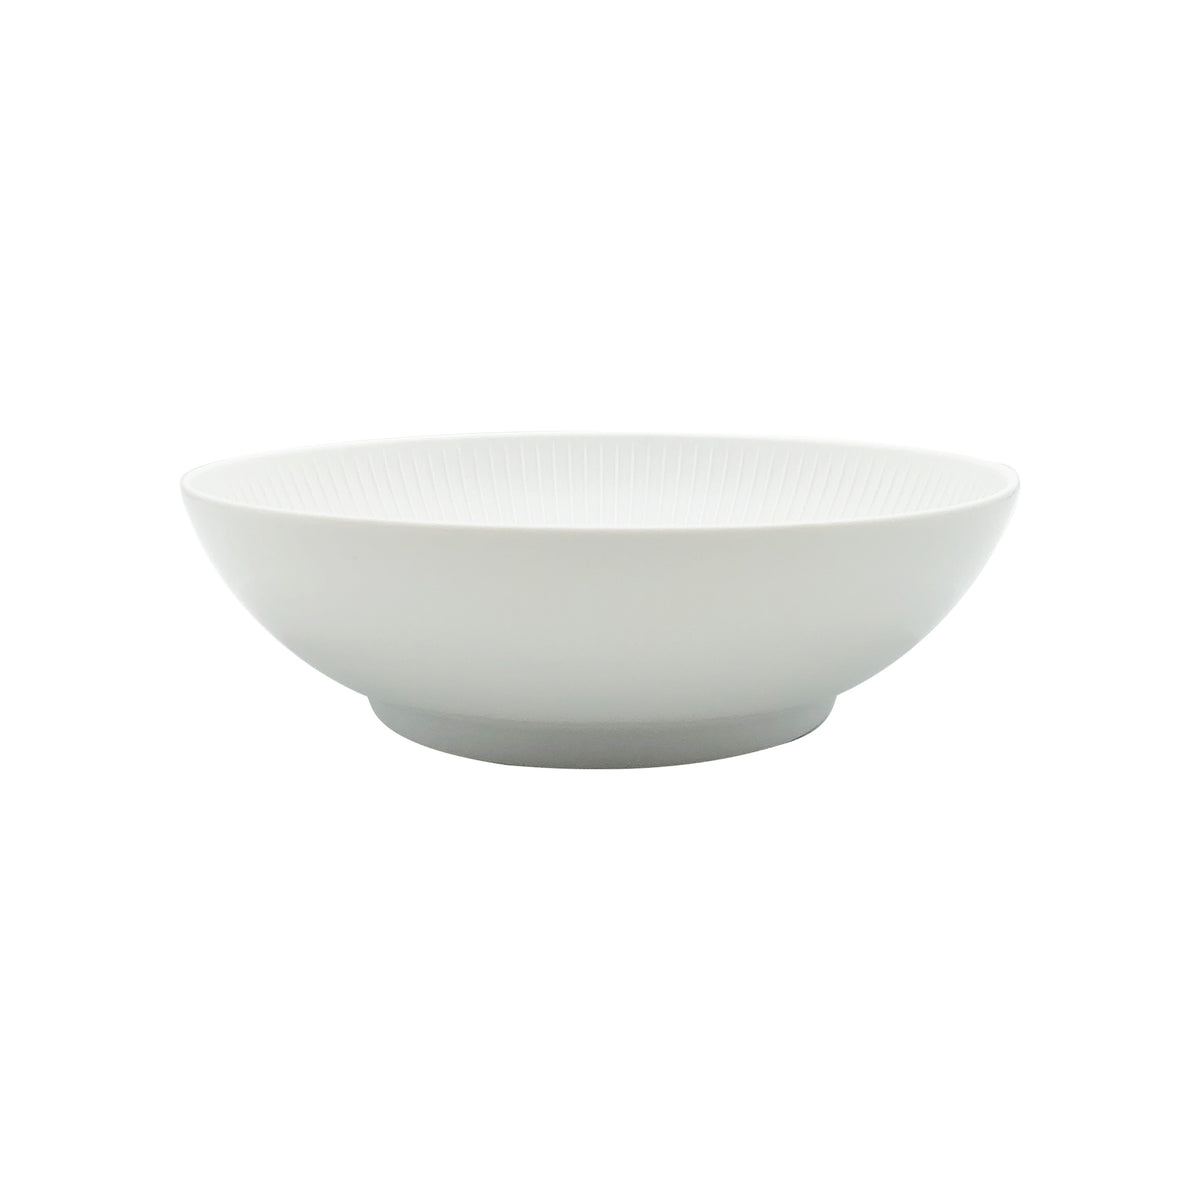 BOLERO White satin - GM salad bowl